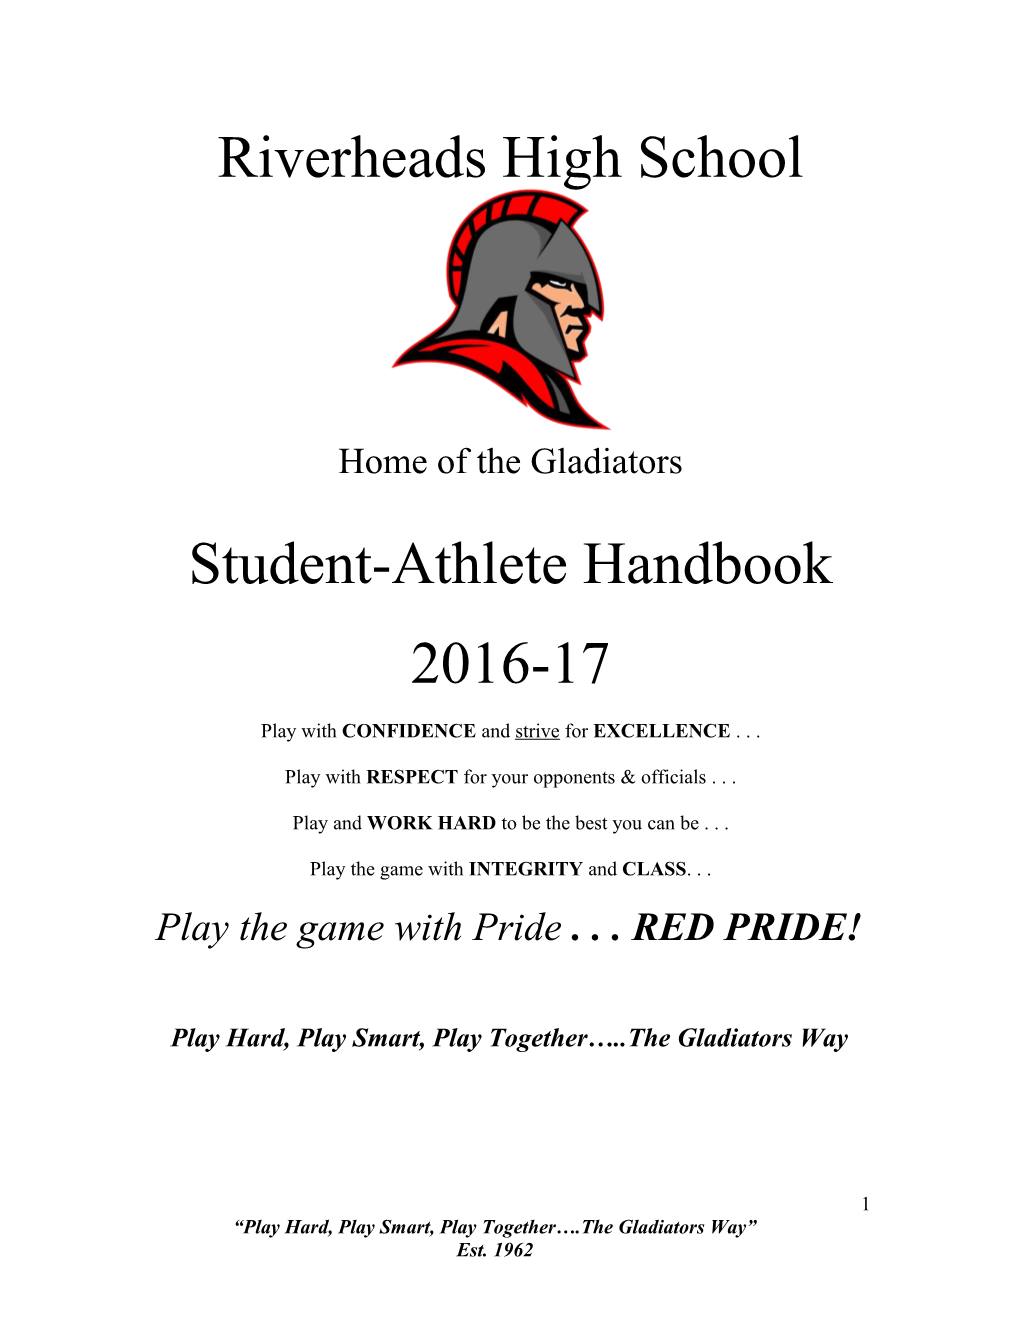 Riverheads High School Athletic Department